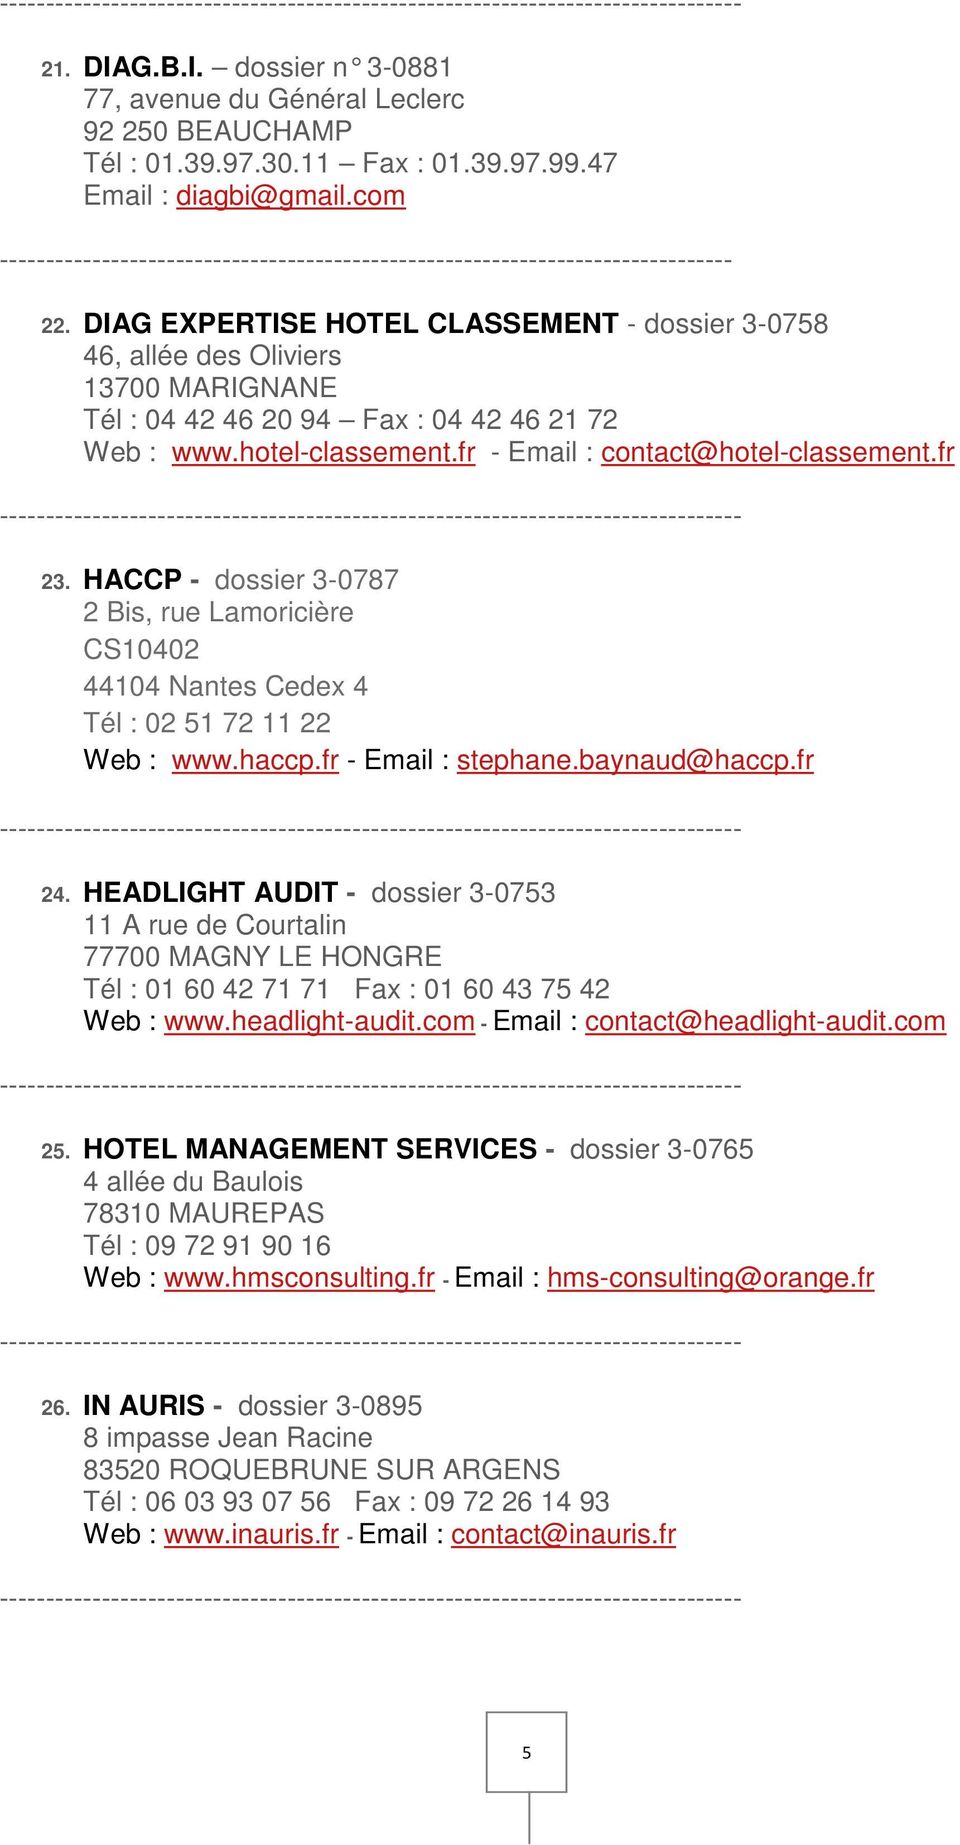 DIAG EXPERTISE HOTEL CLASSEMENT - dossier 3-0758 46, allée des Oliviers 13700 MARIGNANE Tél : 04 42 46 20 94 Fax : 04 42 46 21 72 Web : www.hotel-classement.fr - Email : contact@hotel-classement.